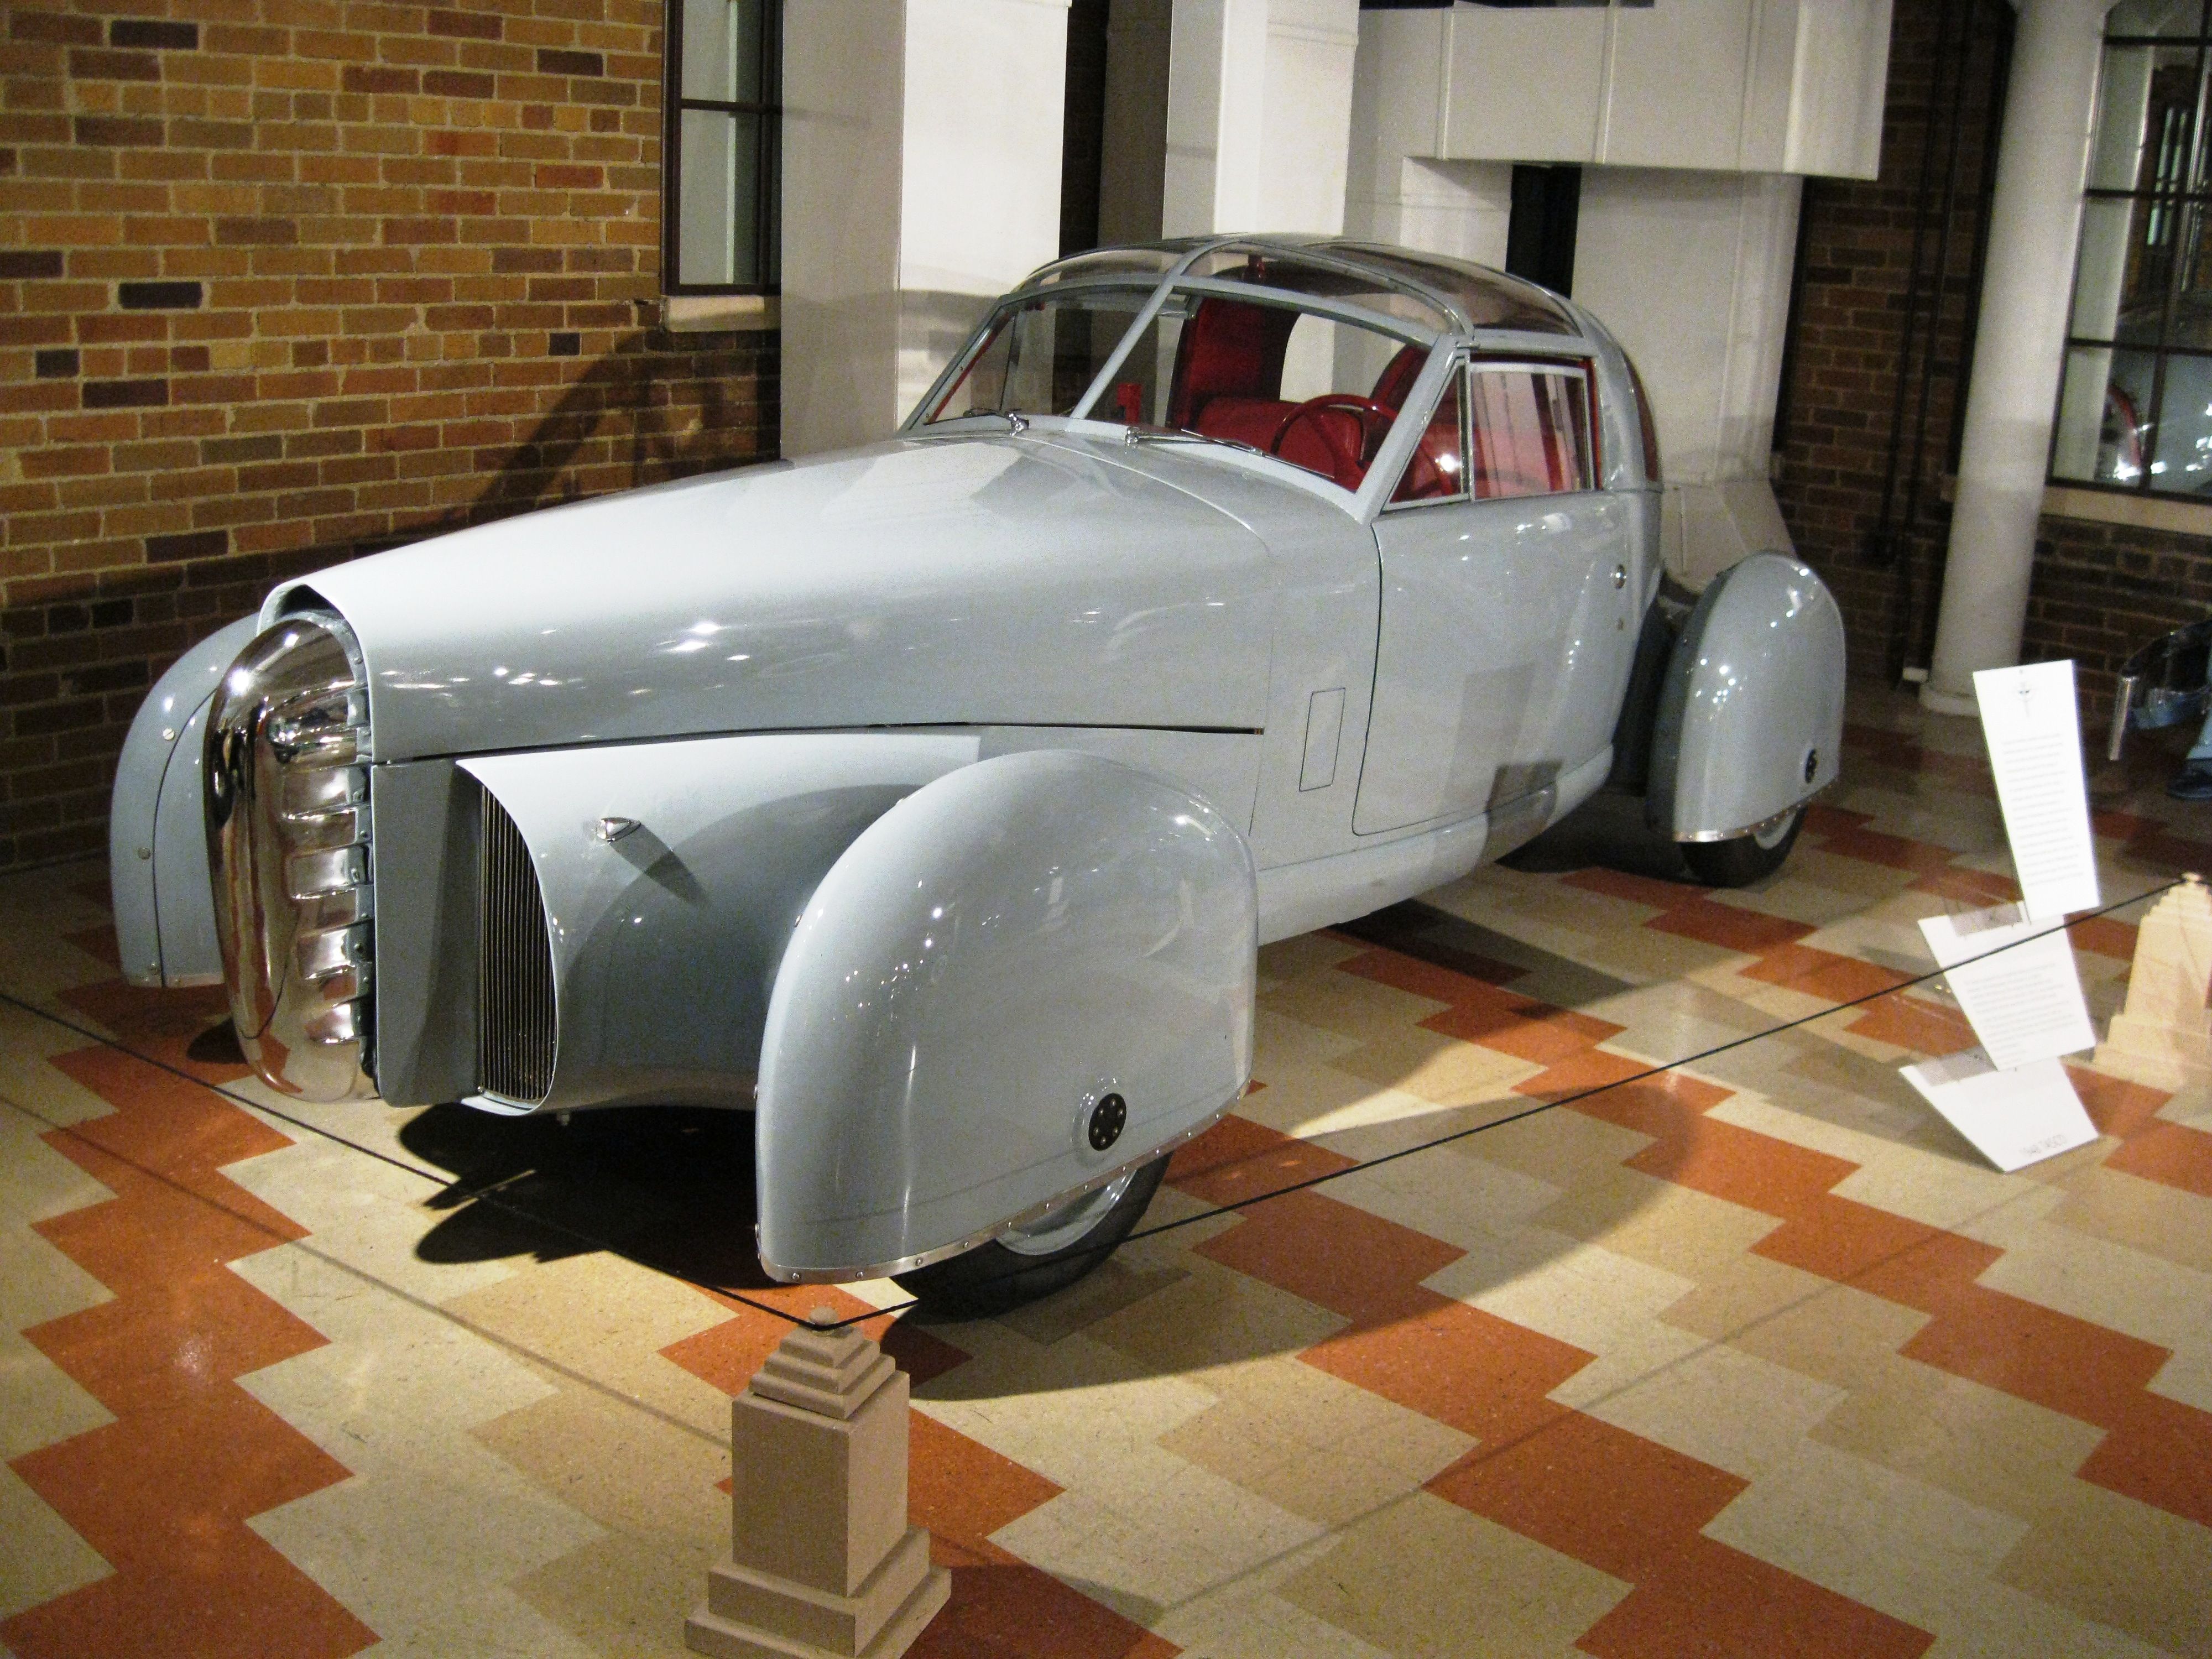 1948 Tasco parked inside a building